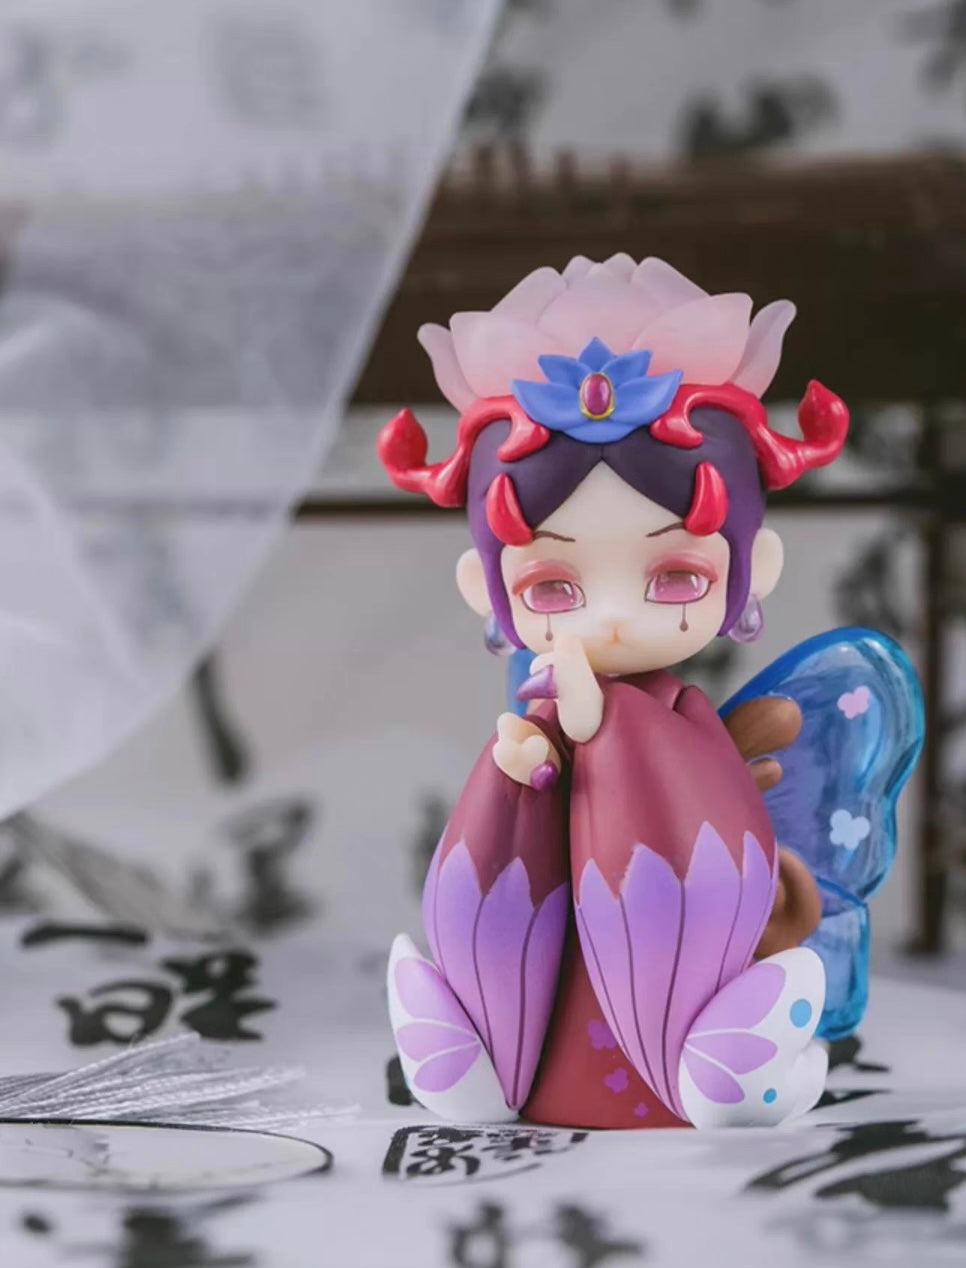 Spice princess legend of zhenhuan toy doll